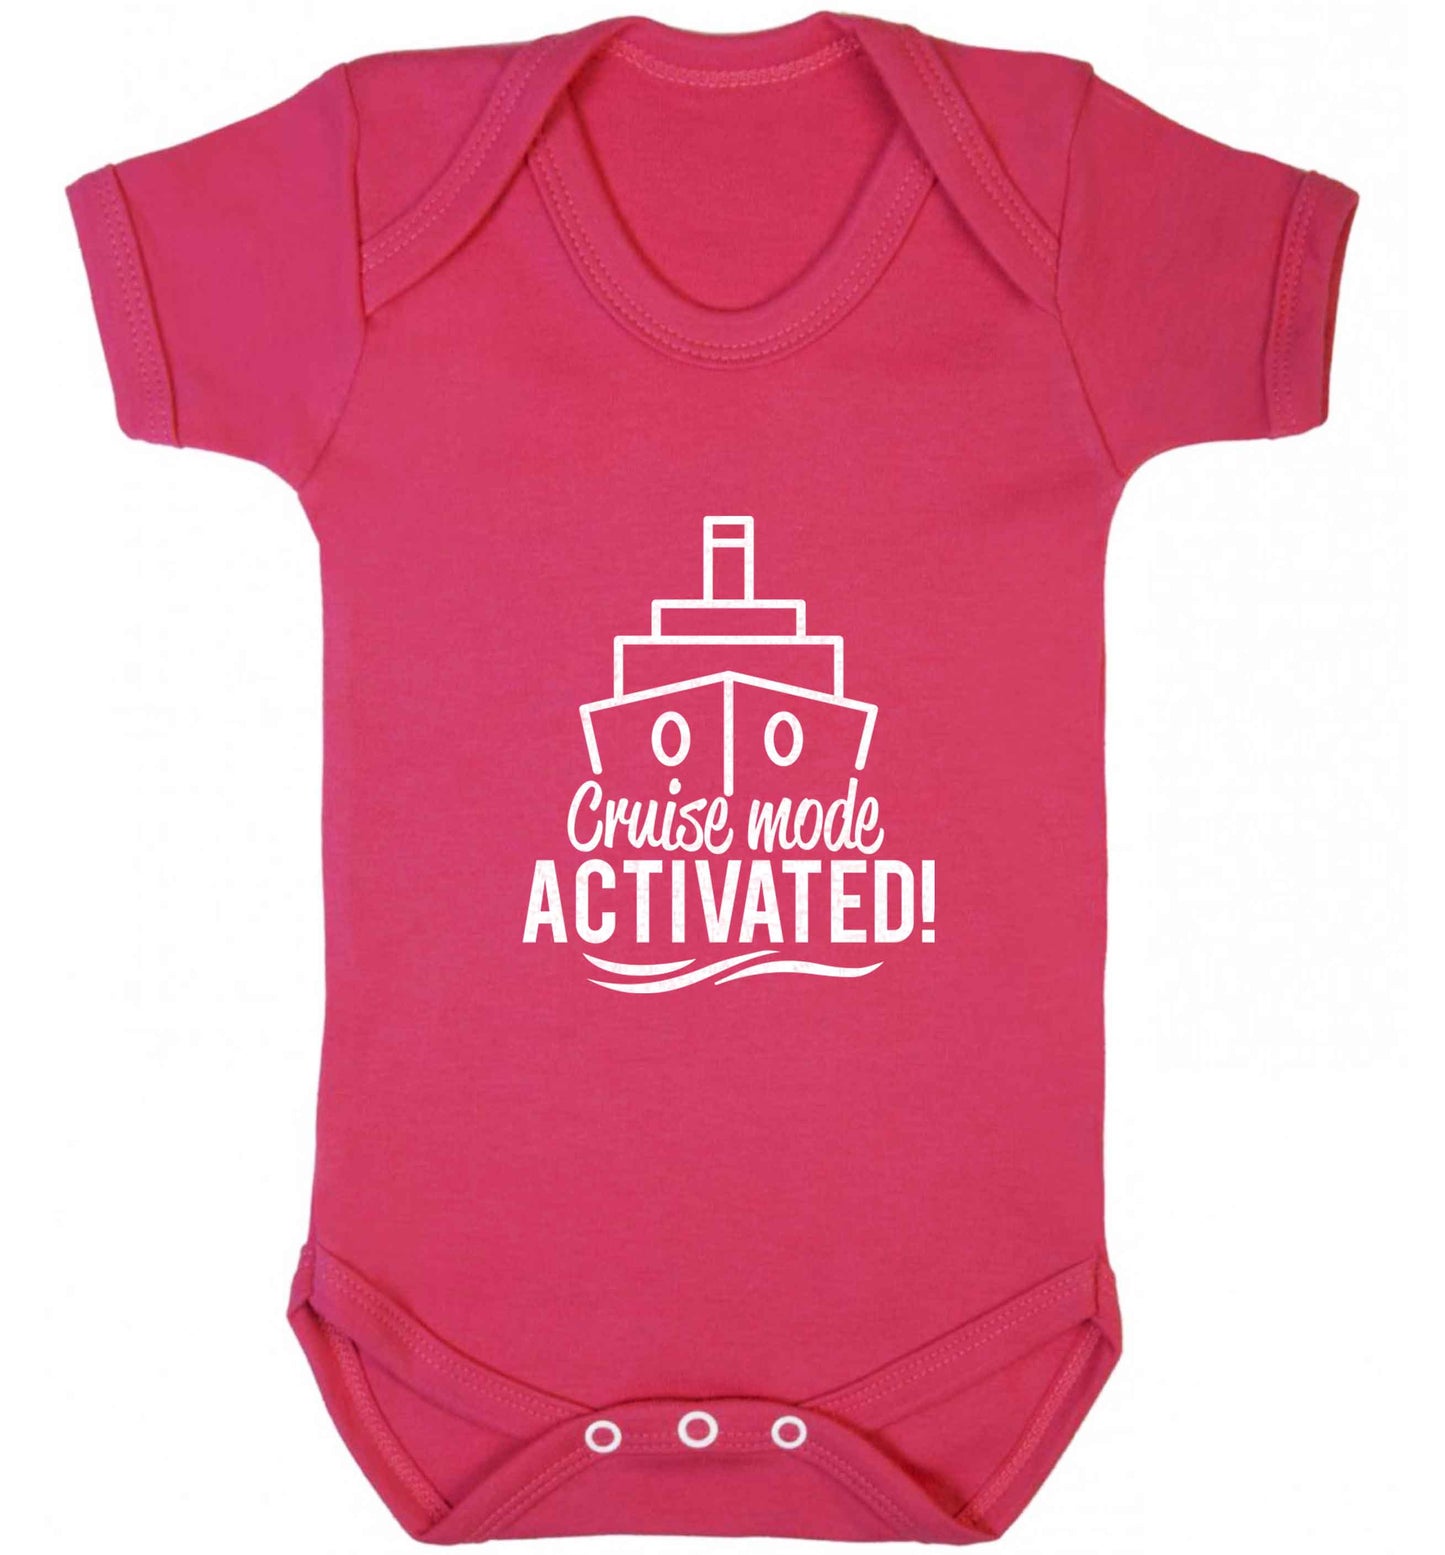 Cruise mode activated baby vest dark pink 18-24 months